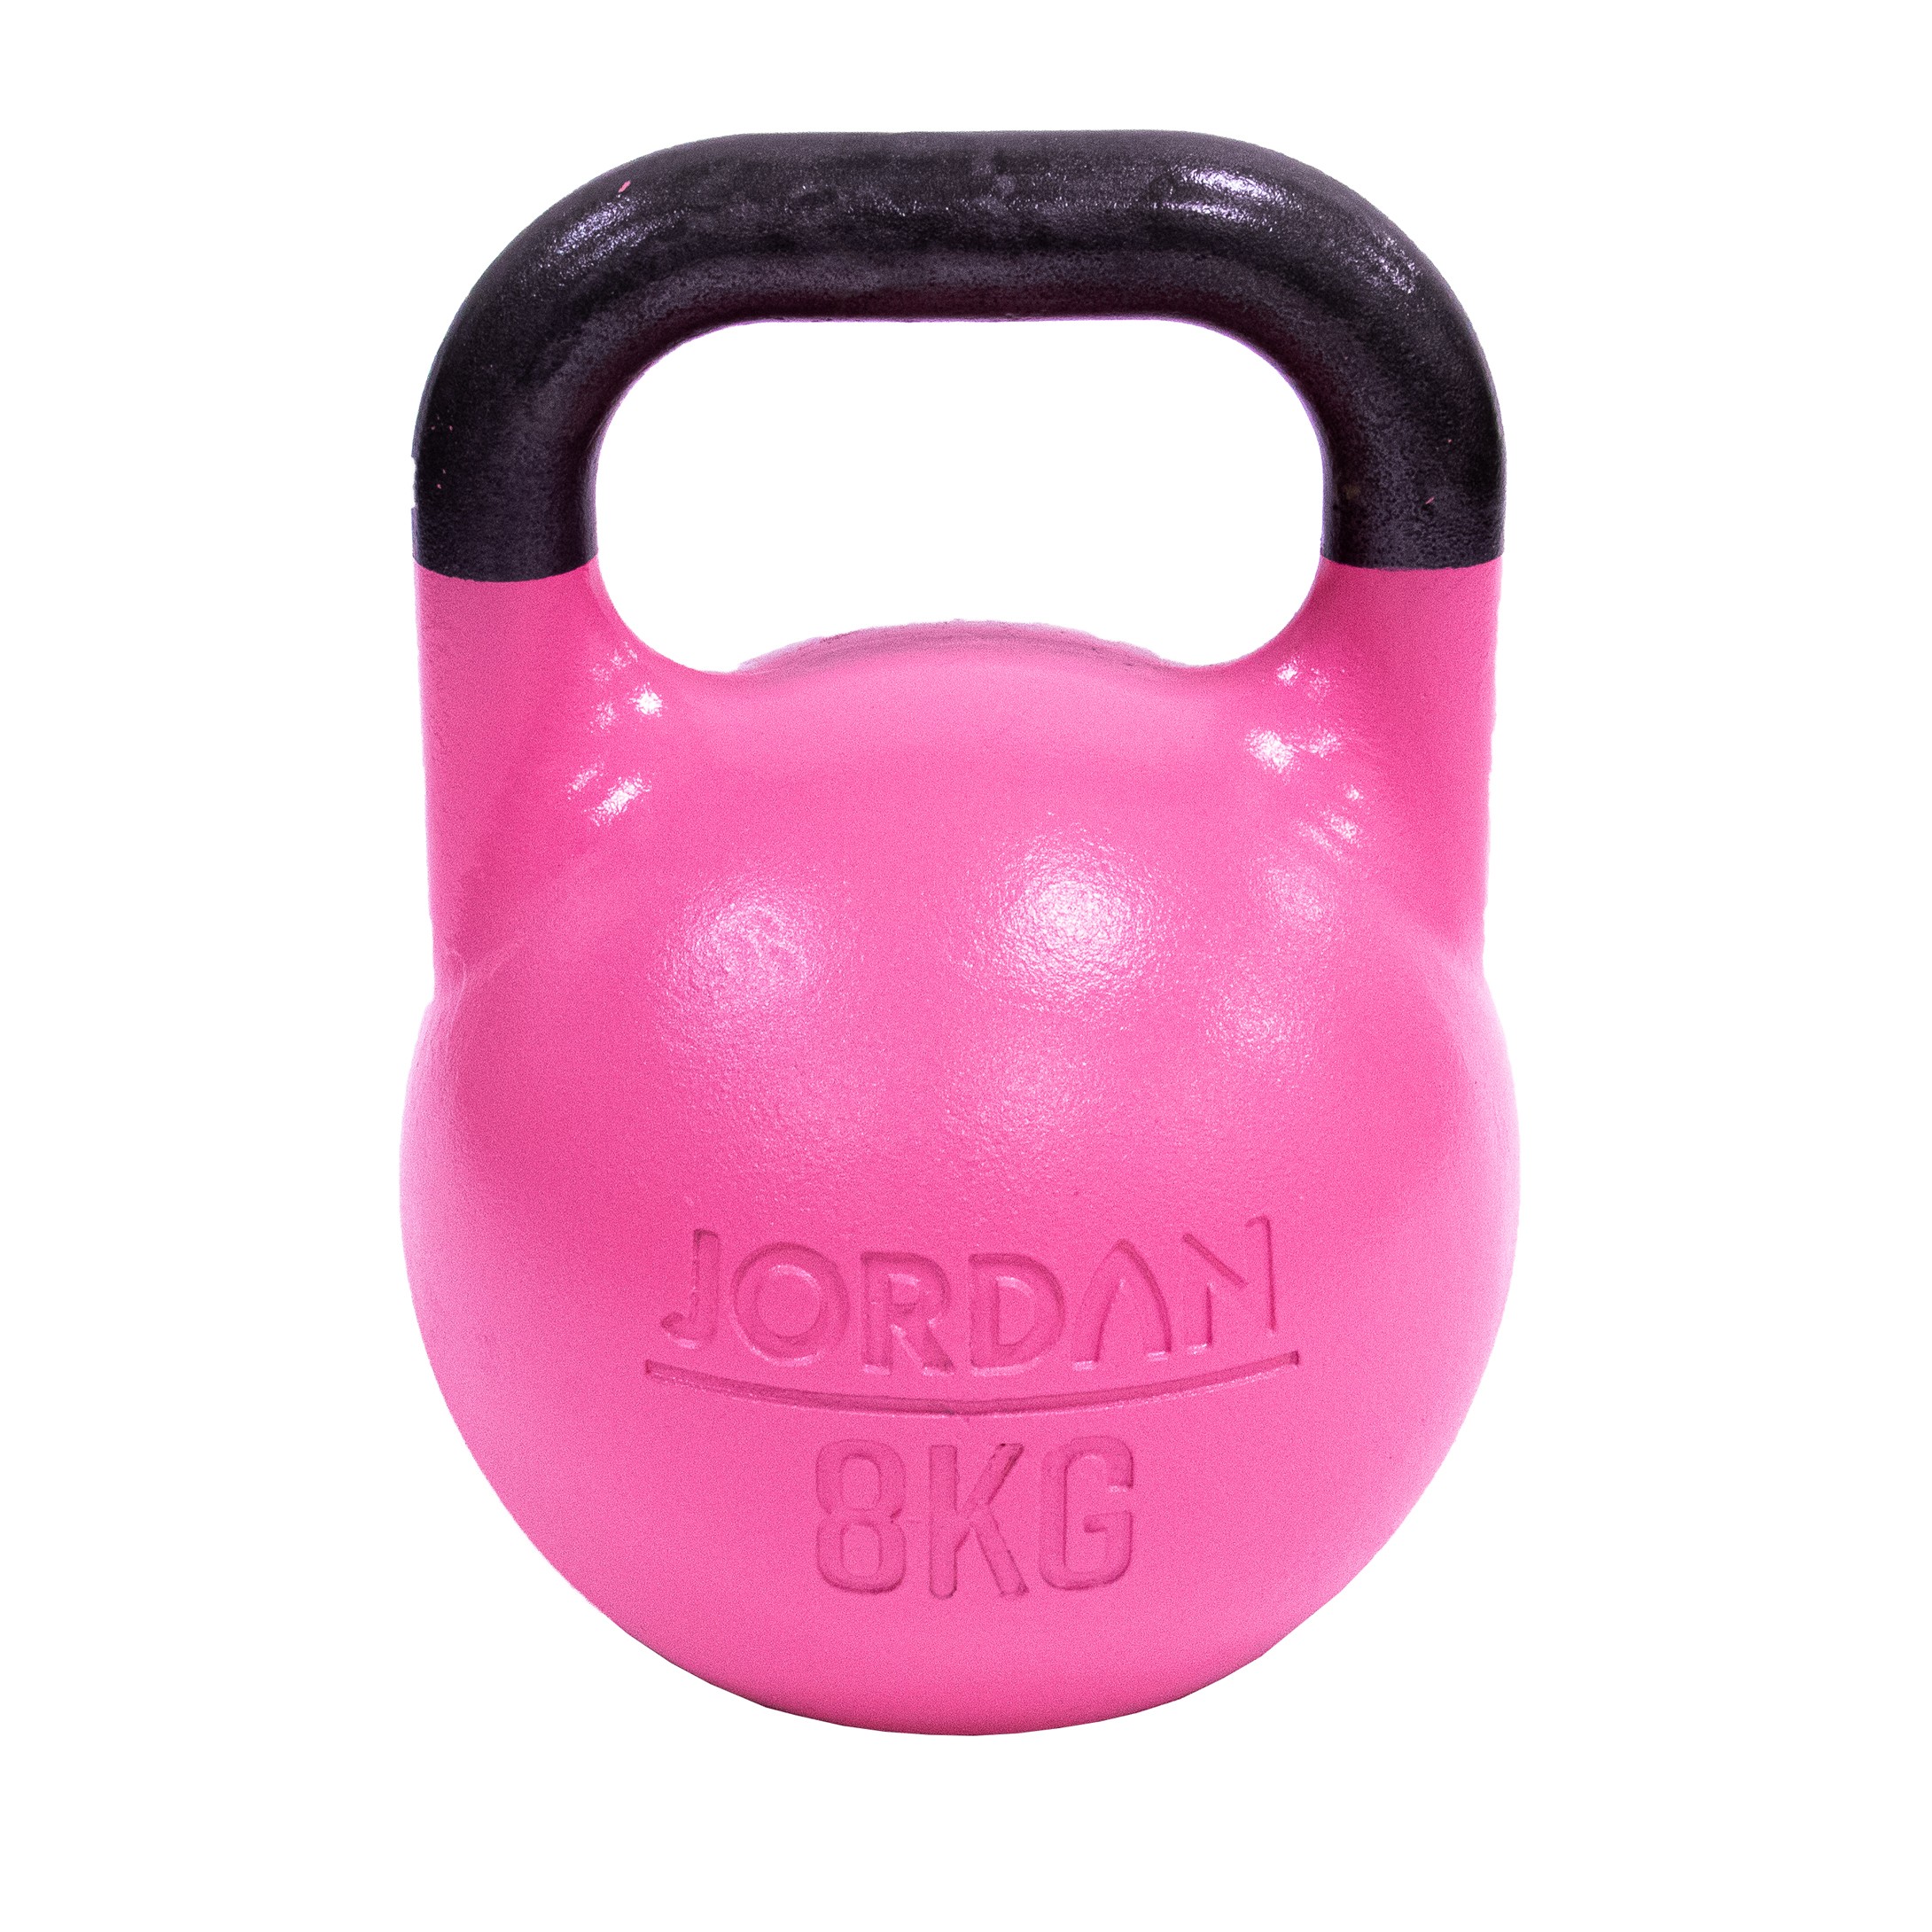 8kg Competition kettlebell - Pink (each) kopen? Ga voor kwaliteit | AStepAhead - Competition Kettlebells AStepAhead